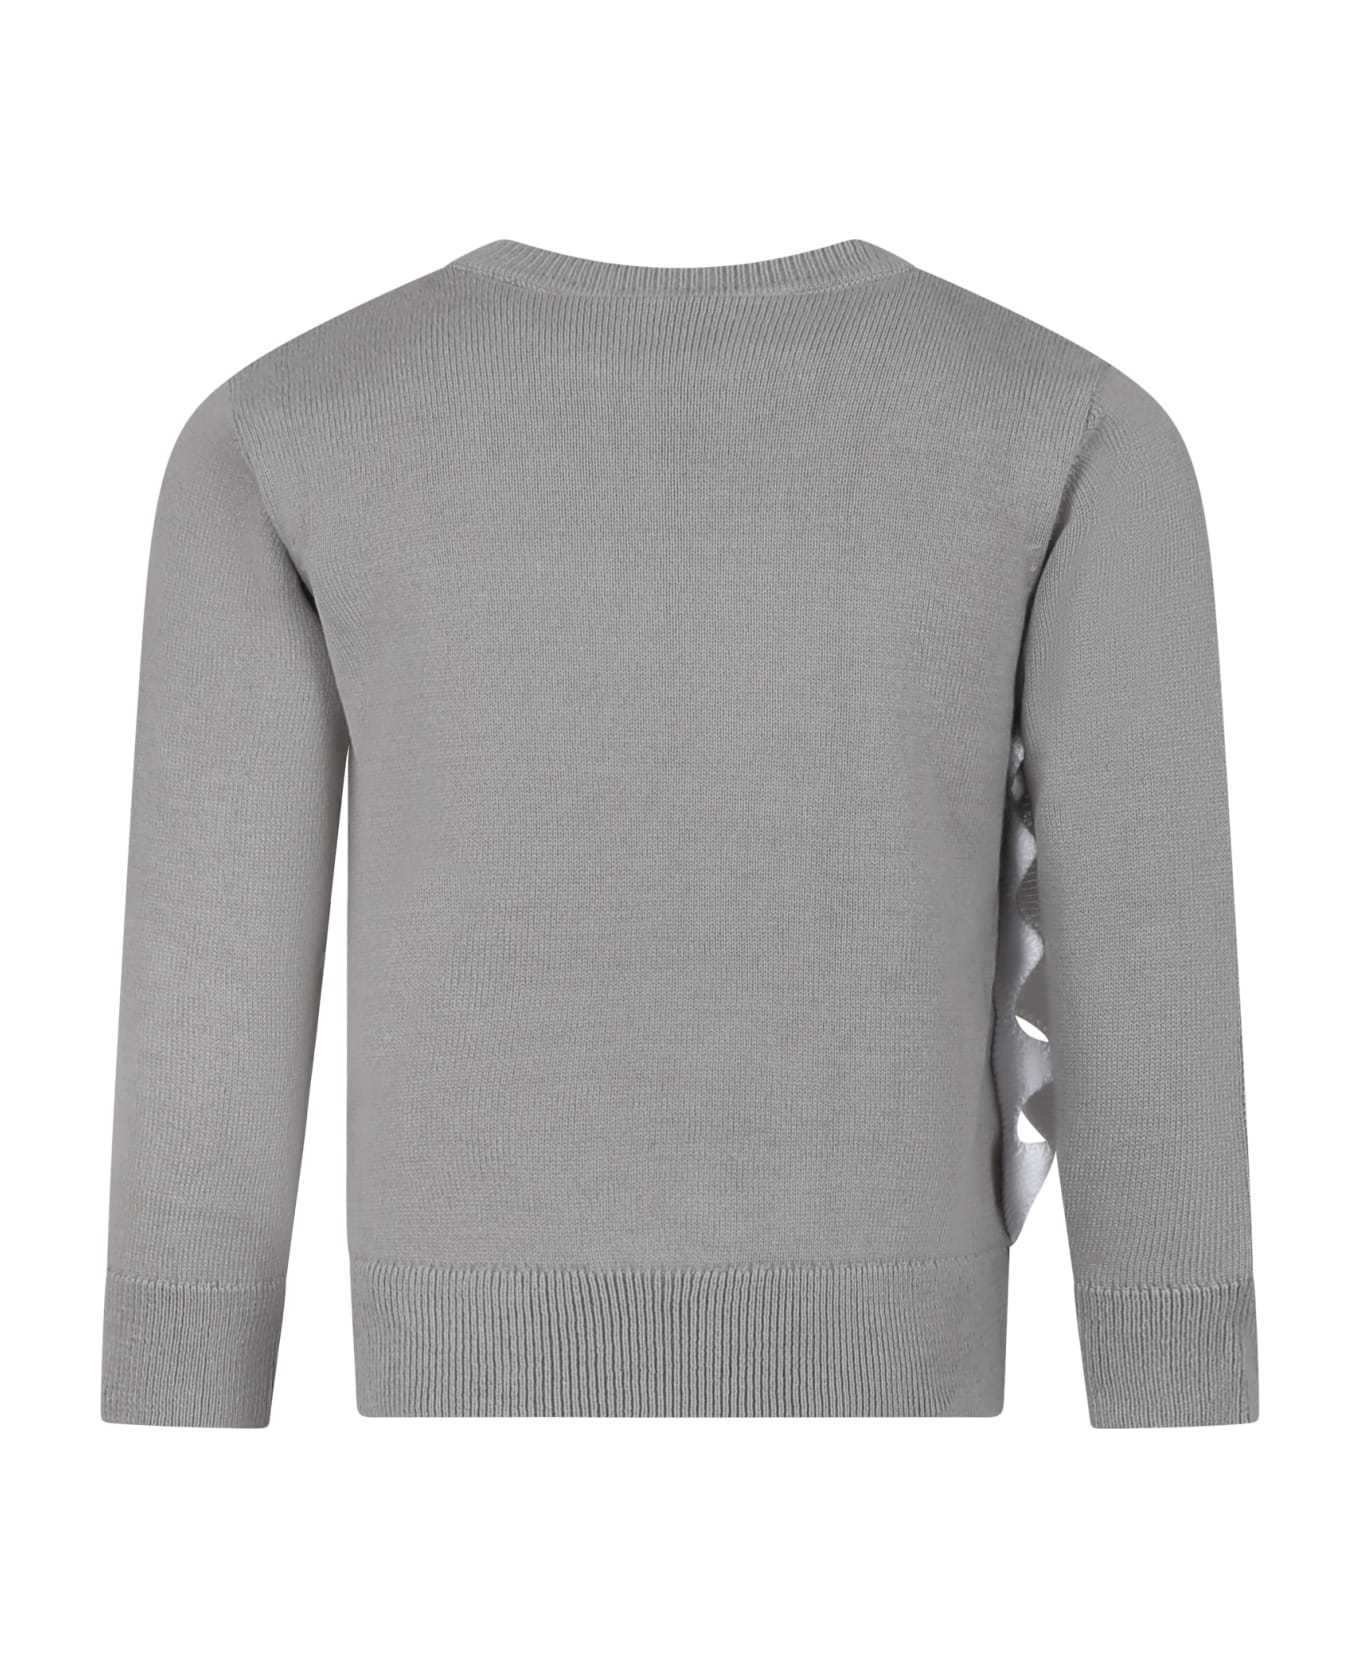 Stella McCartney Kids Gray Sweater For Boy With Shark - Grey ニットウェア＆スウェットシャツ